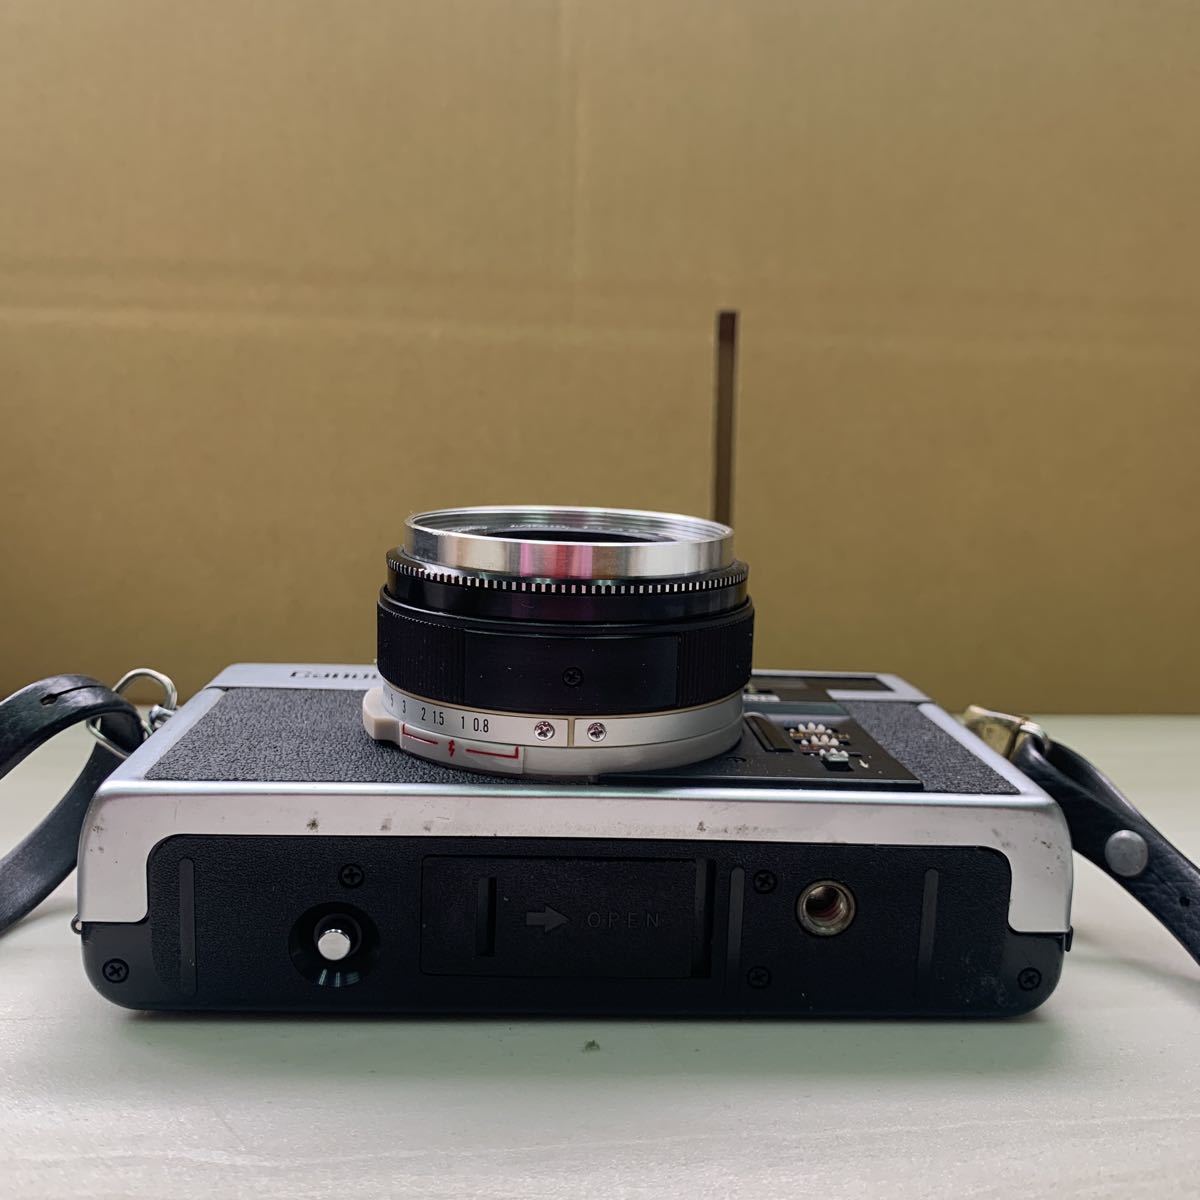 Canon Canodate E Canon range finder film camera not yet verification 3806